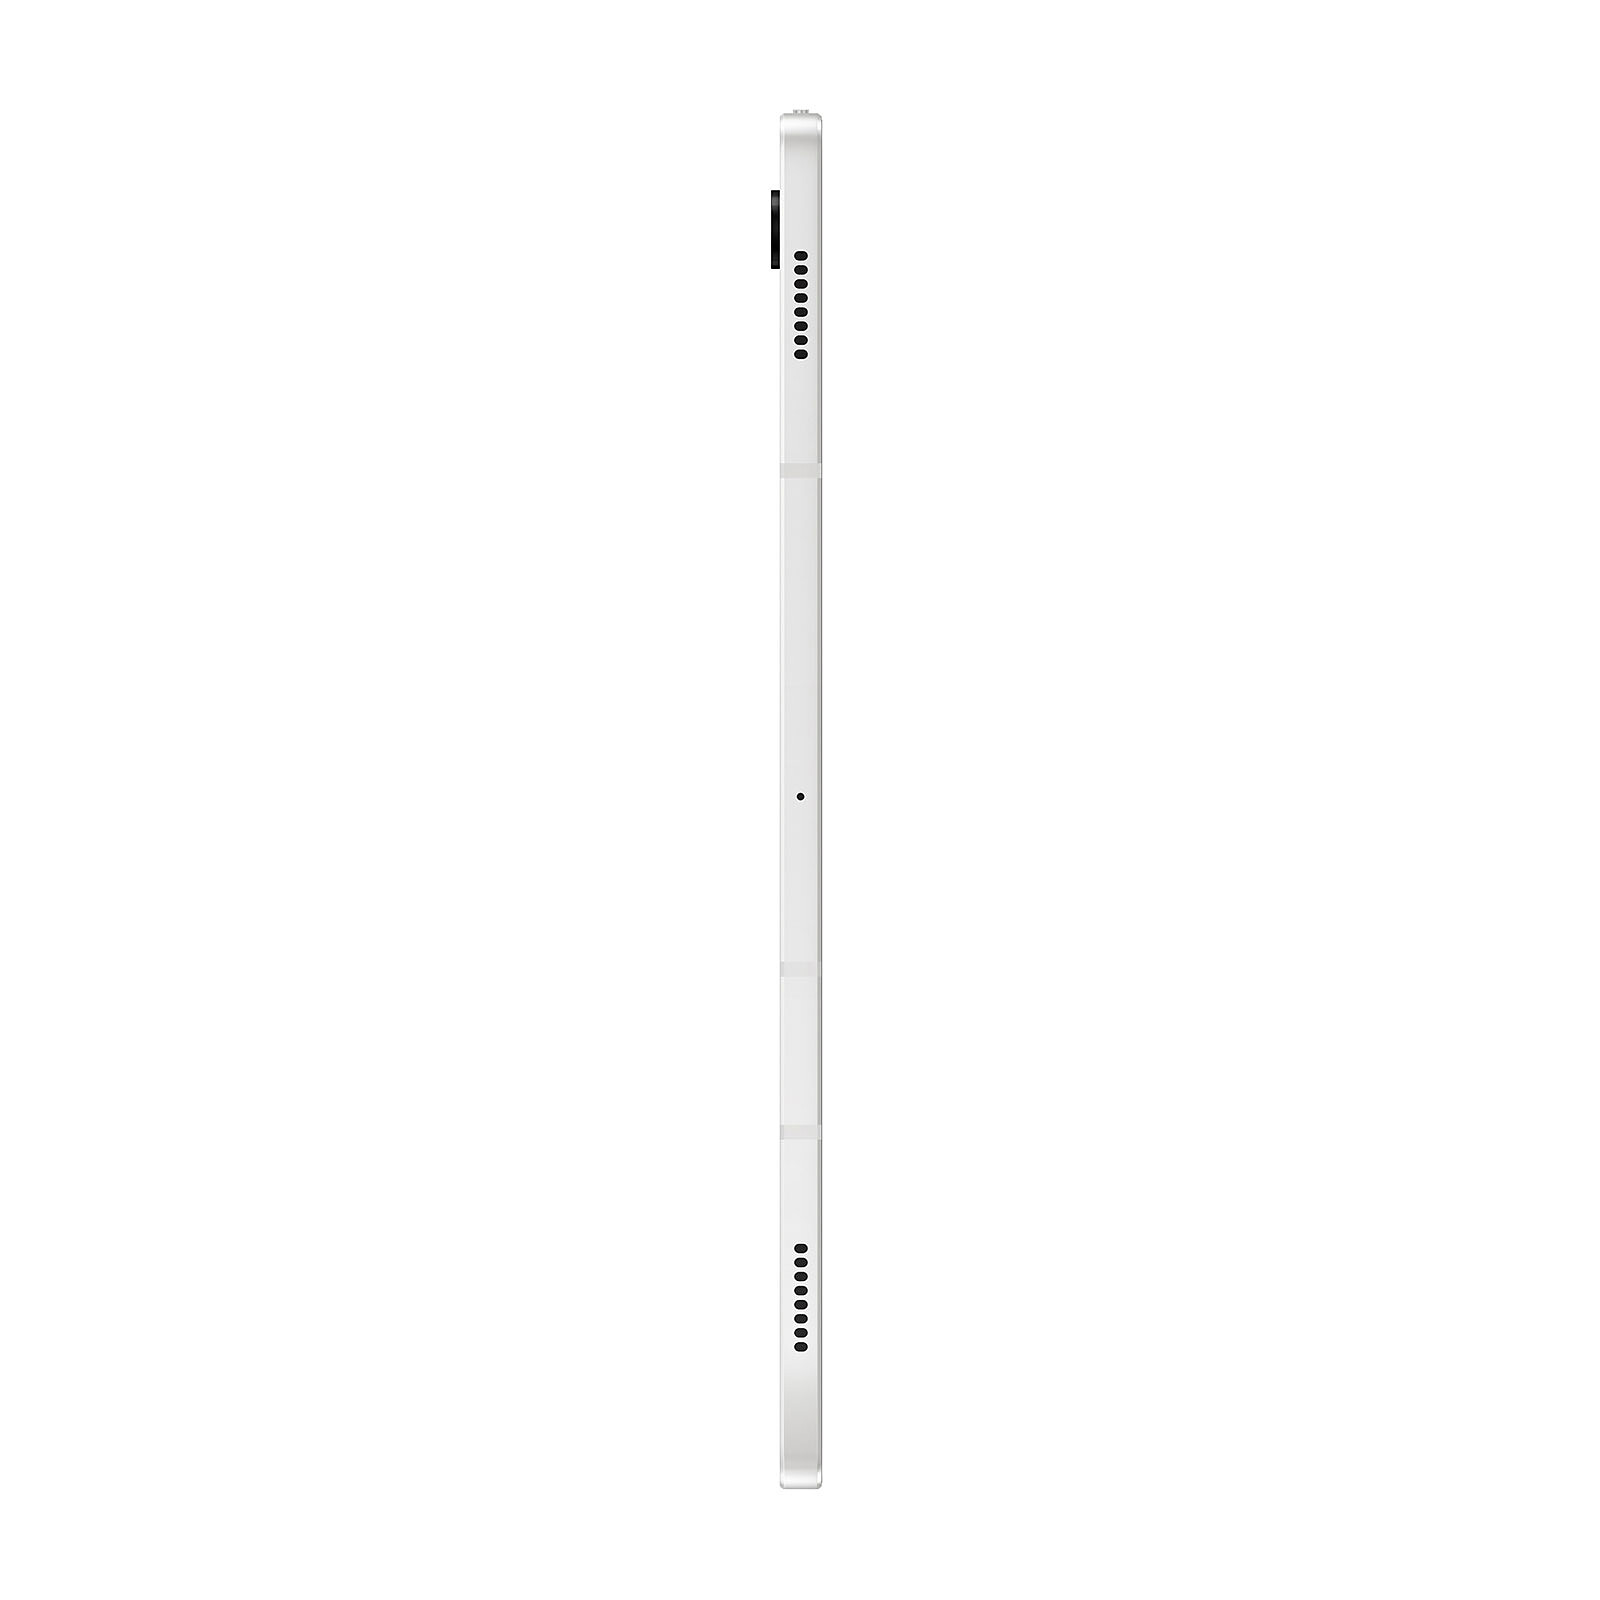 Samsung Galaxy Tab S6 Lite 2022 10.4 SM-P613 128 Go Gris Wi-Fi - Tablette  tactile - Garantie 3 ans LDLC